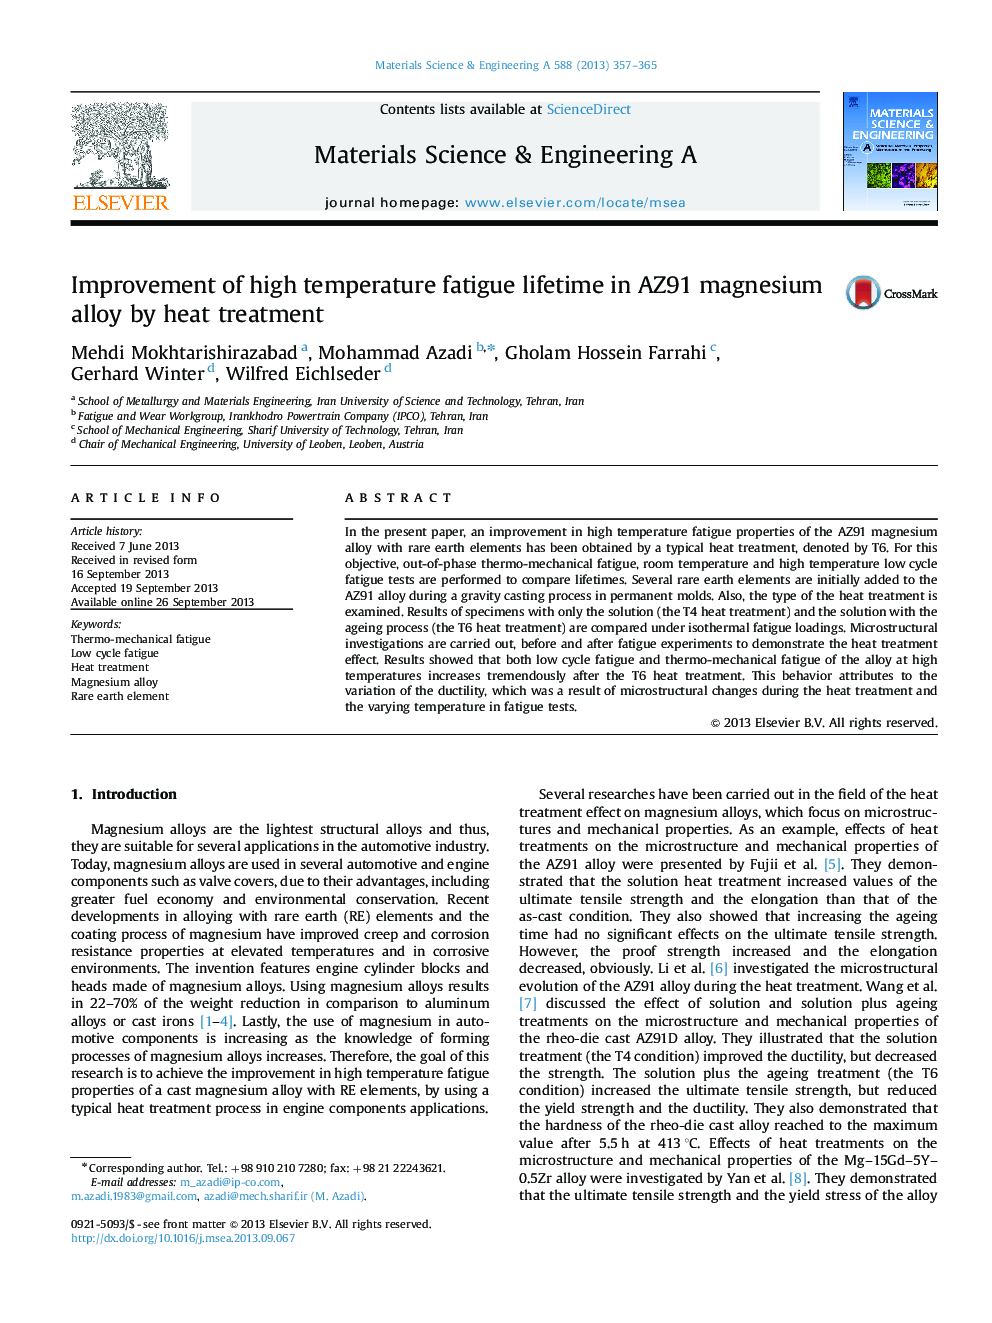 Improvement of high temperature fatigue lifetime in AZ91 magnesium alloy by heat treatment